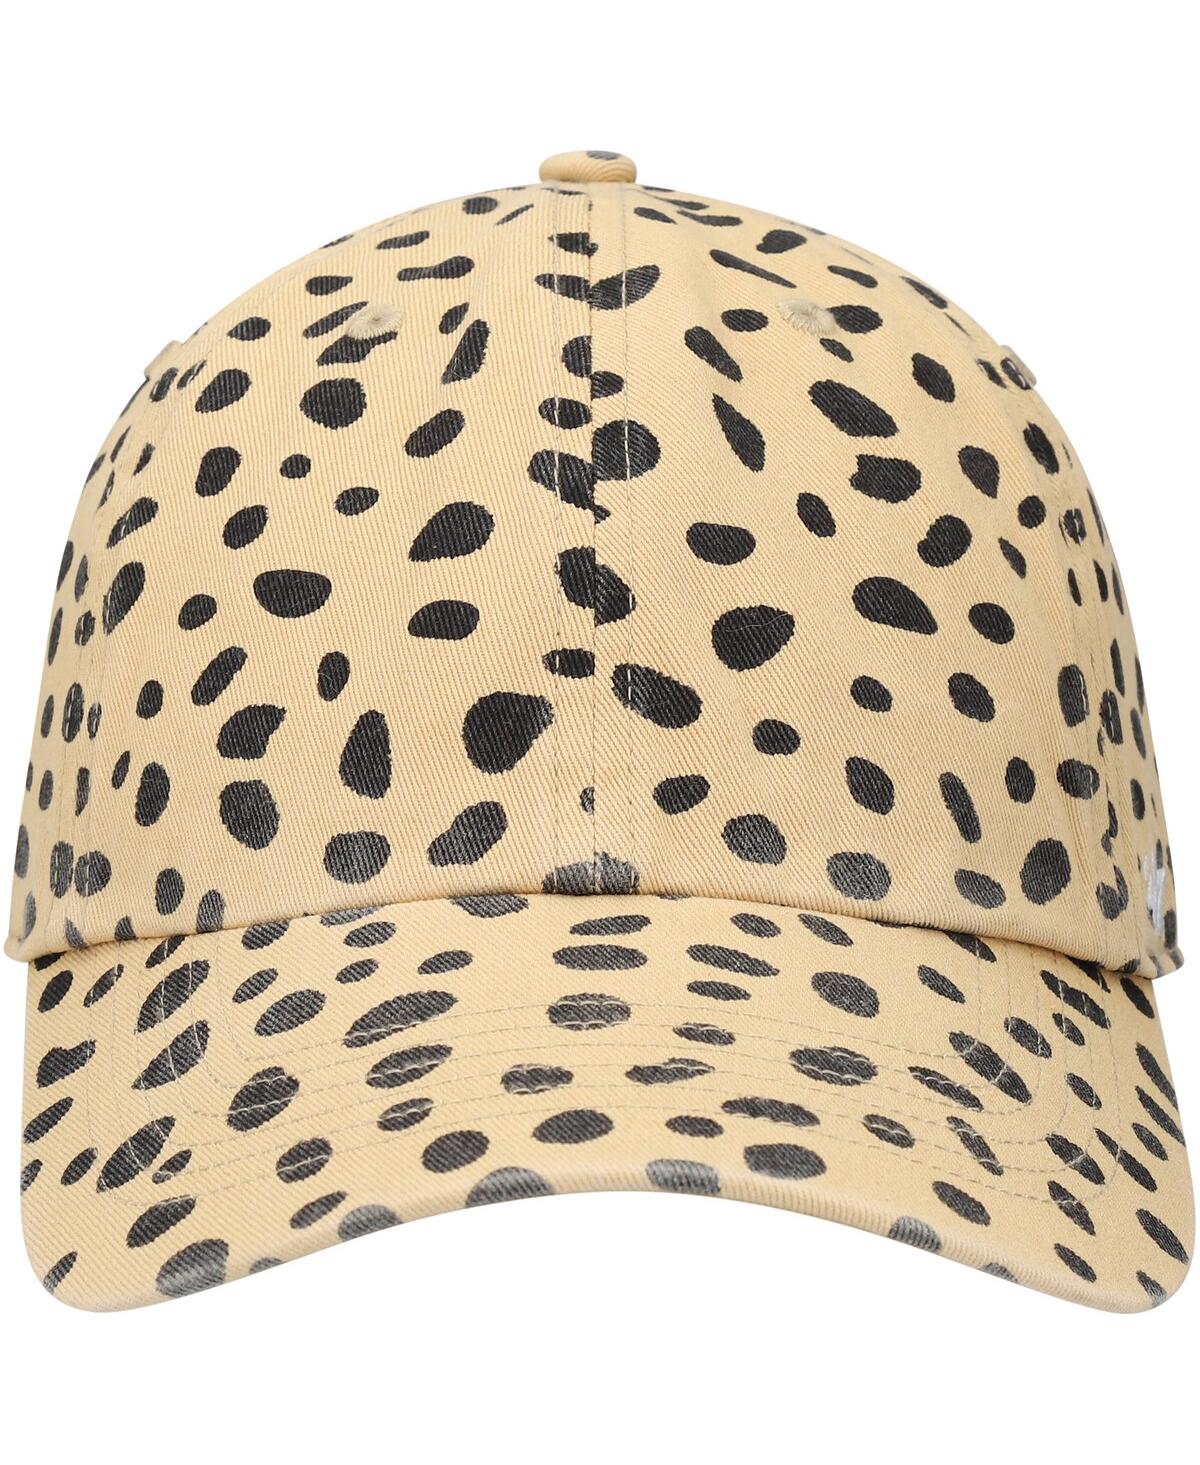 Shop 47 Brand Women's ' Tan Cheetah Clean Up Adjustable Hat